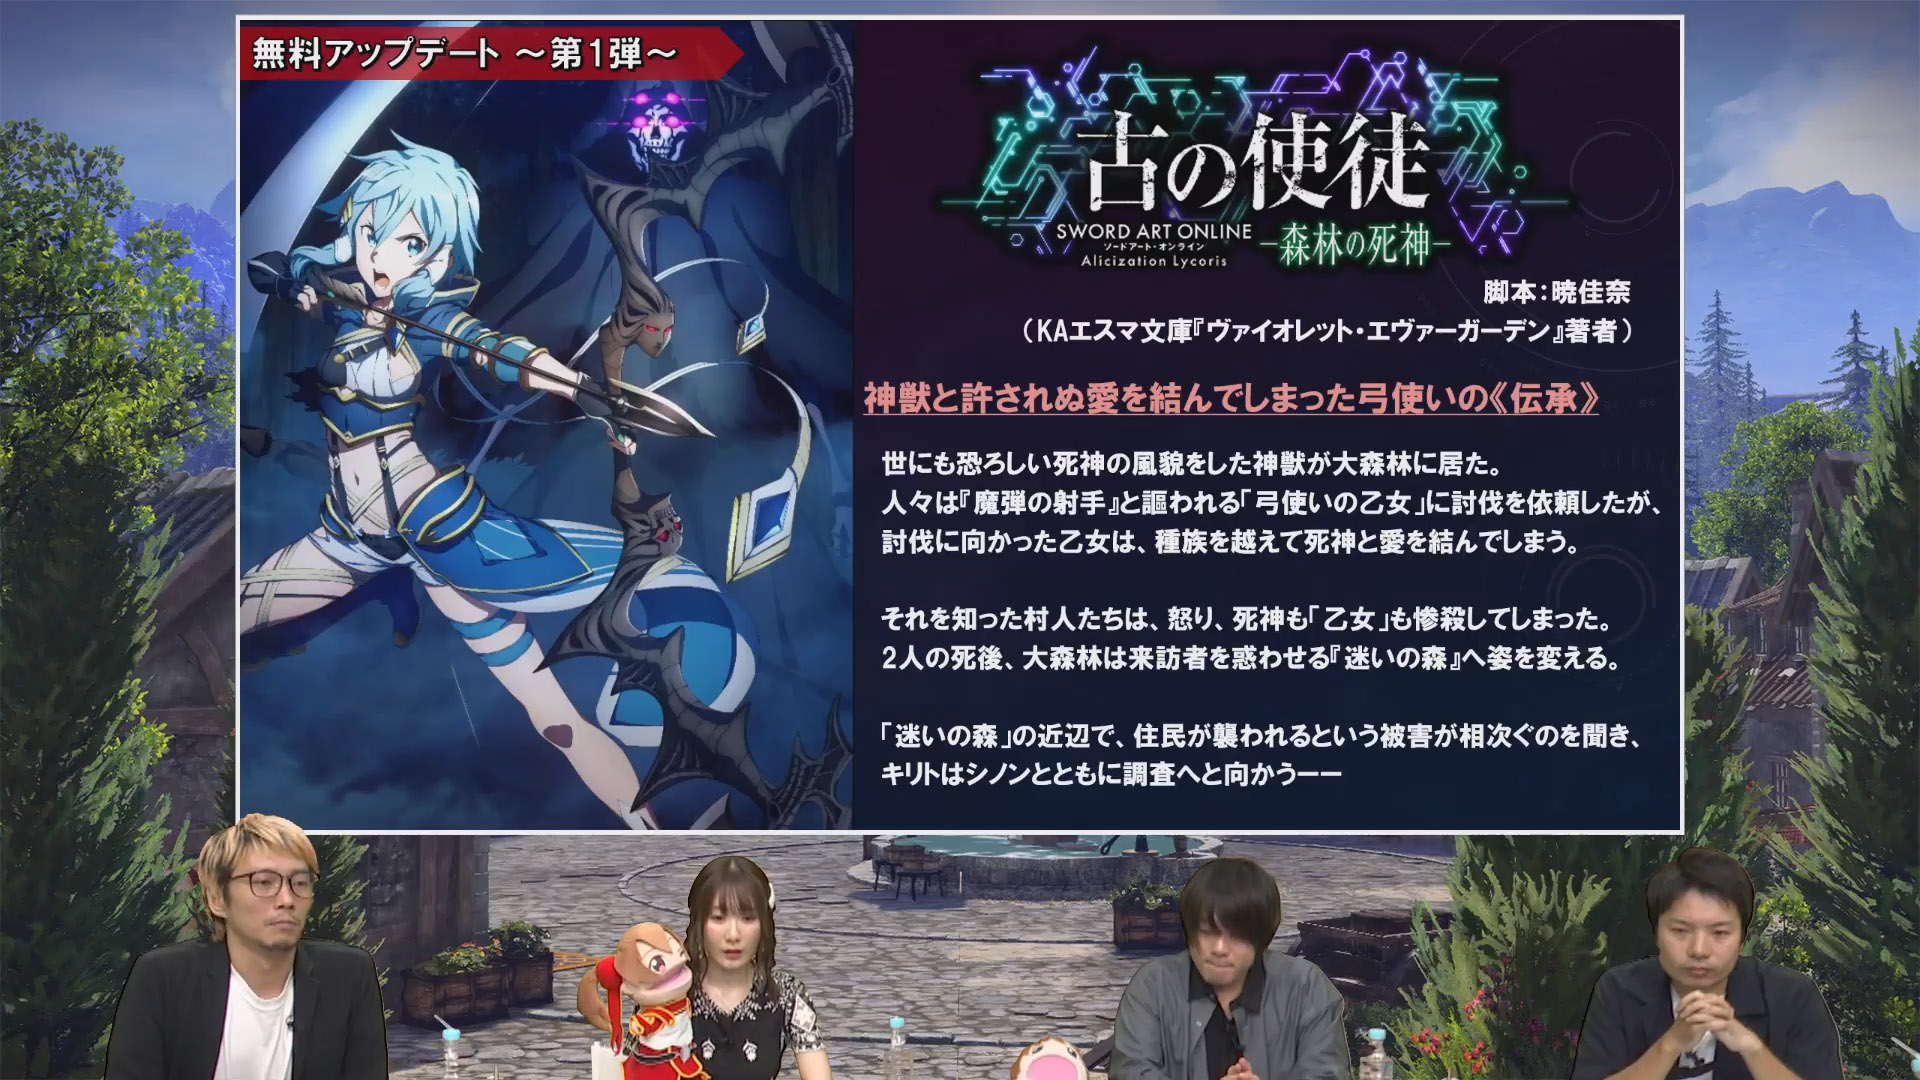 Bandai Namco announces Sword Art Online: Alicization Lycoris